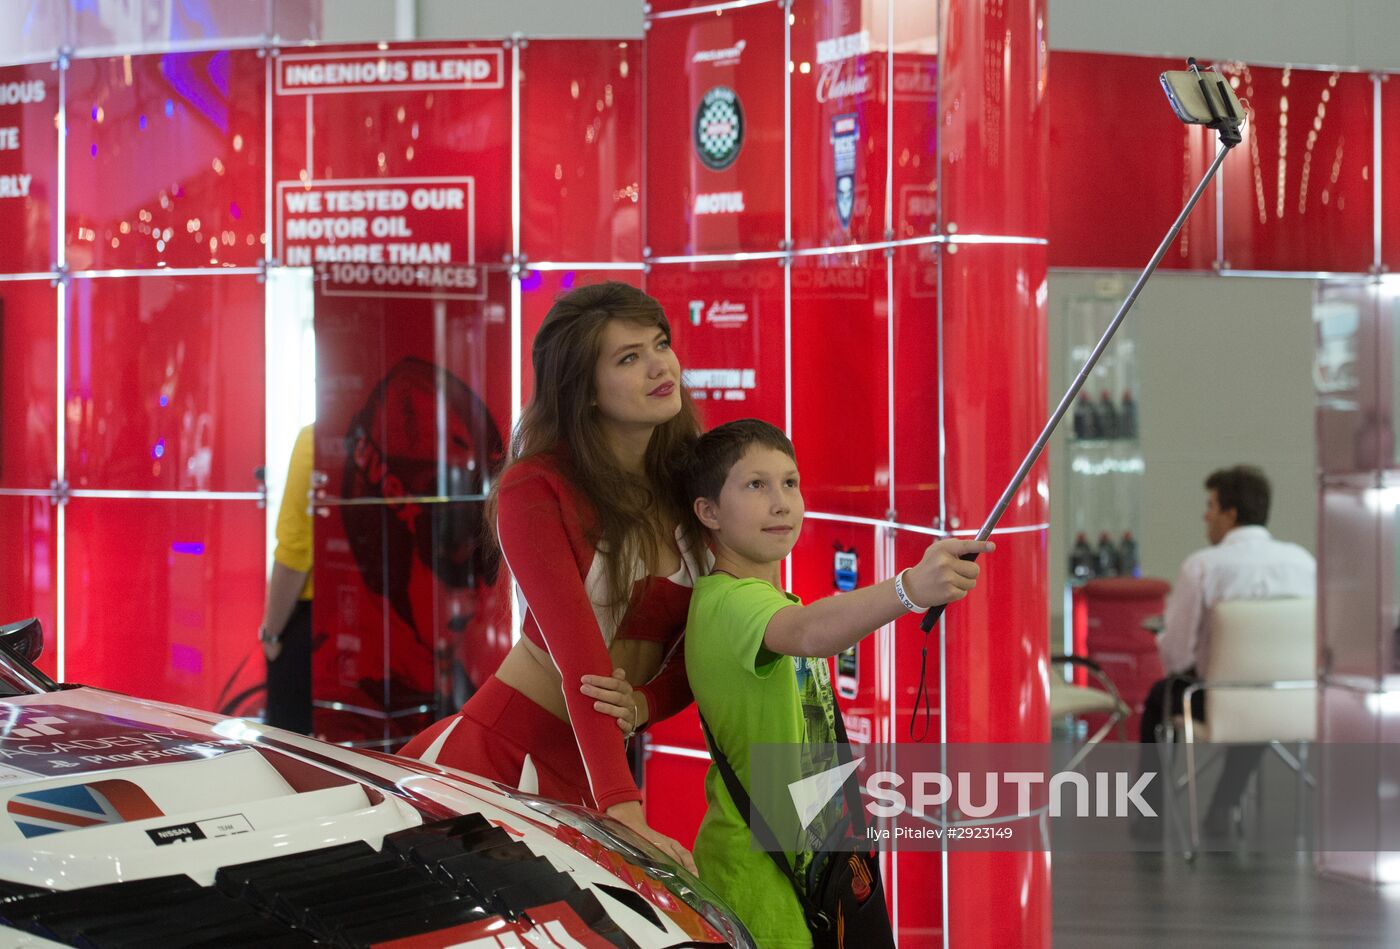 Moscow International Automobile Salon wraps up